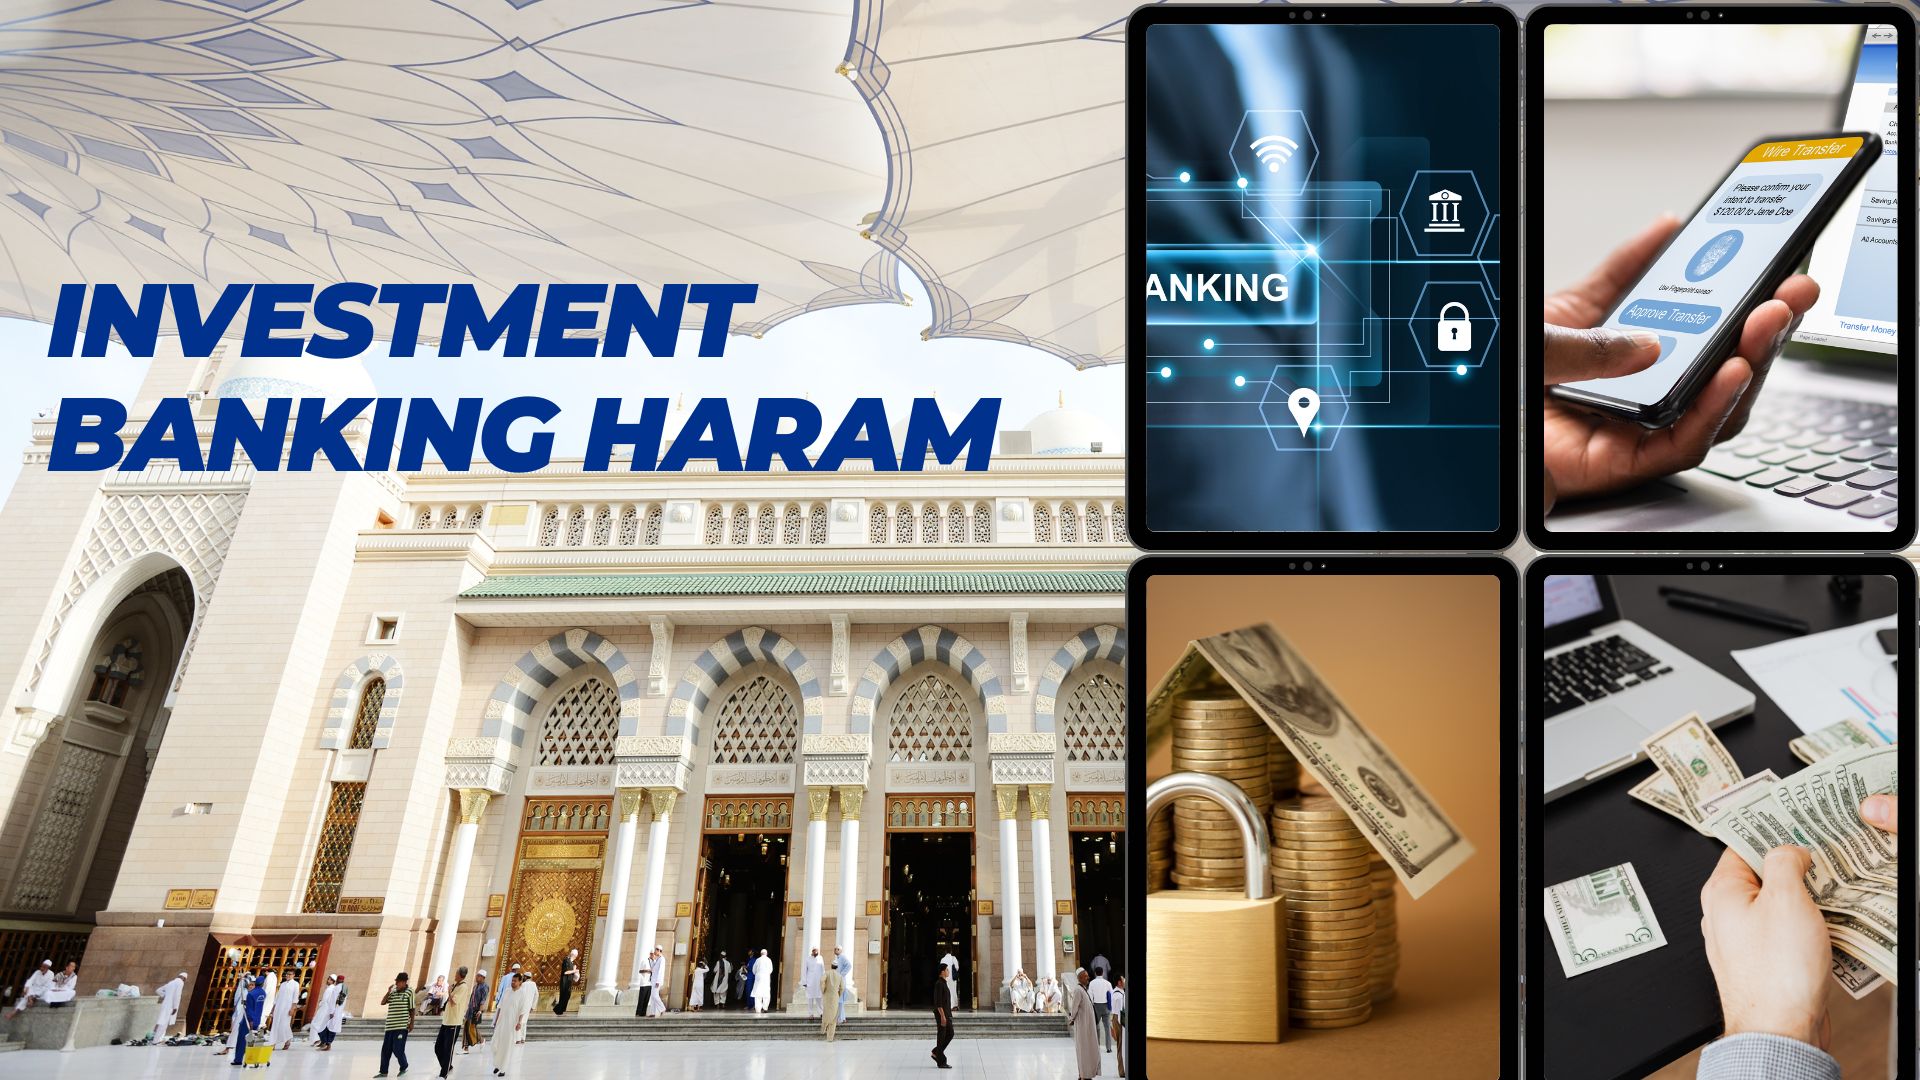 Investment Banking Haram